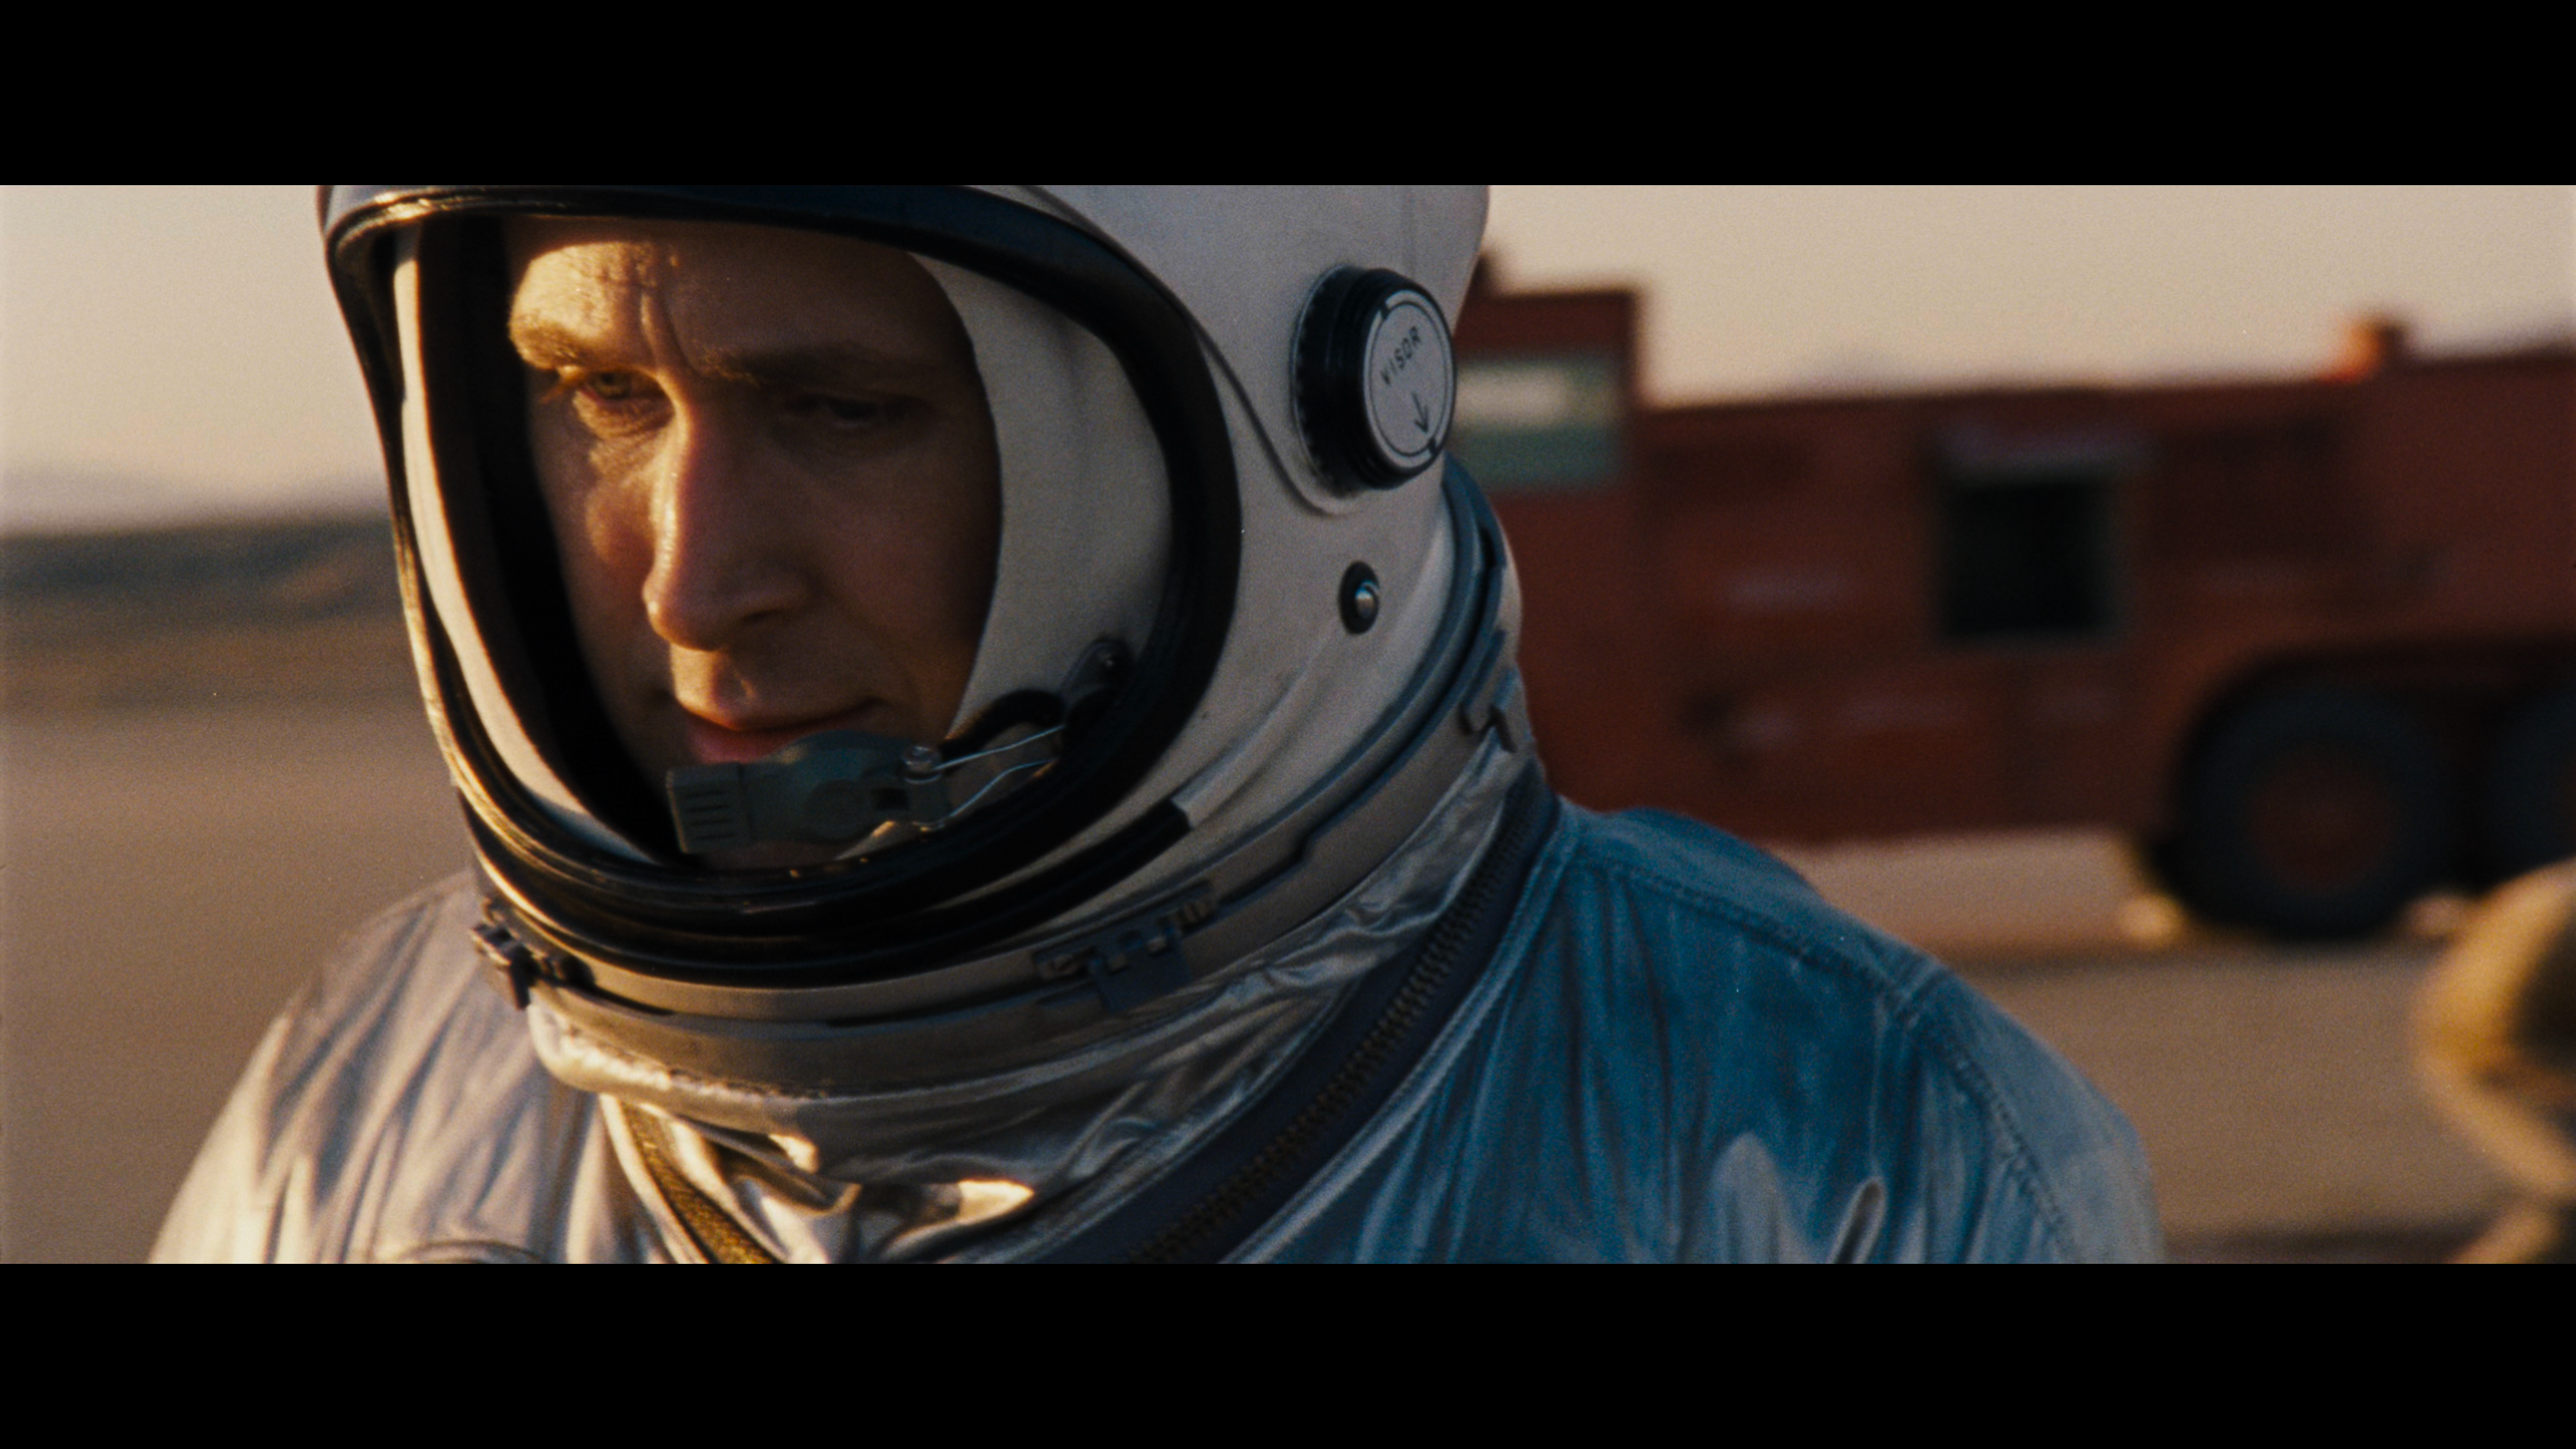 First Man – 4K UHD Blu-ray Screenshots